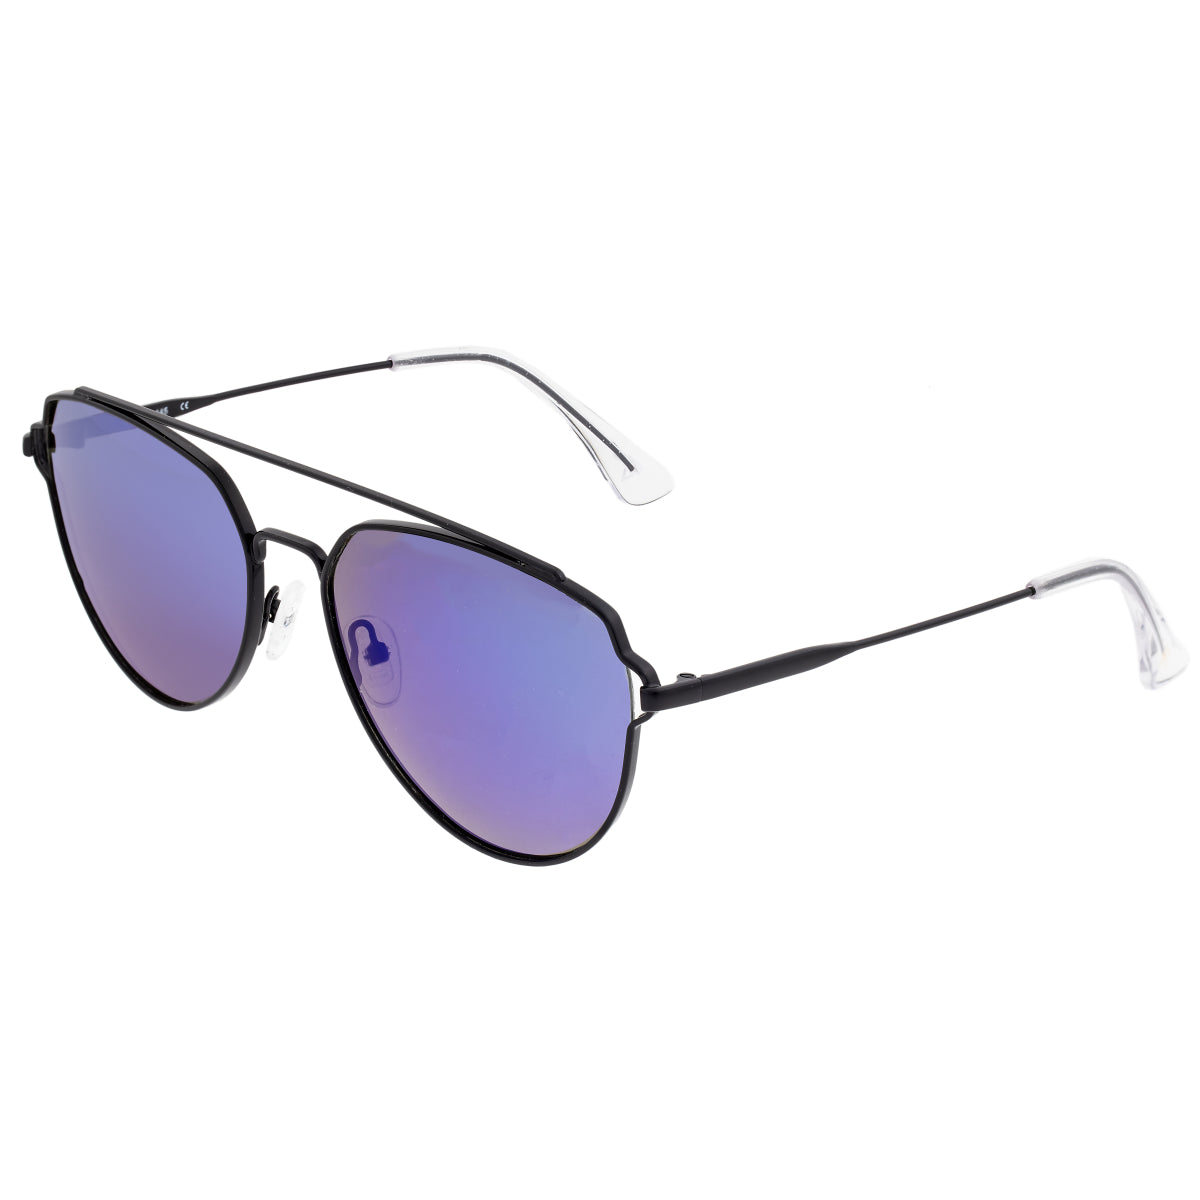 Sixty One Nudge Polarized Sunglasses - Black/Blue-Green - SIXS106BK